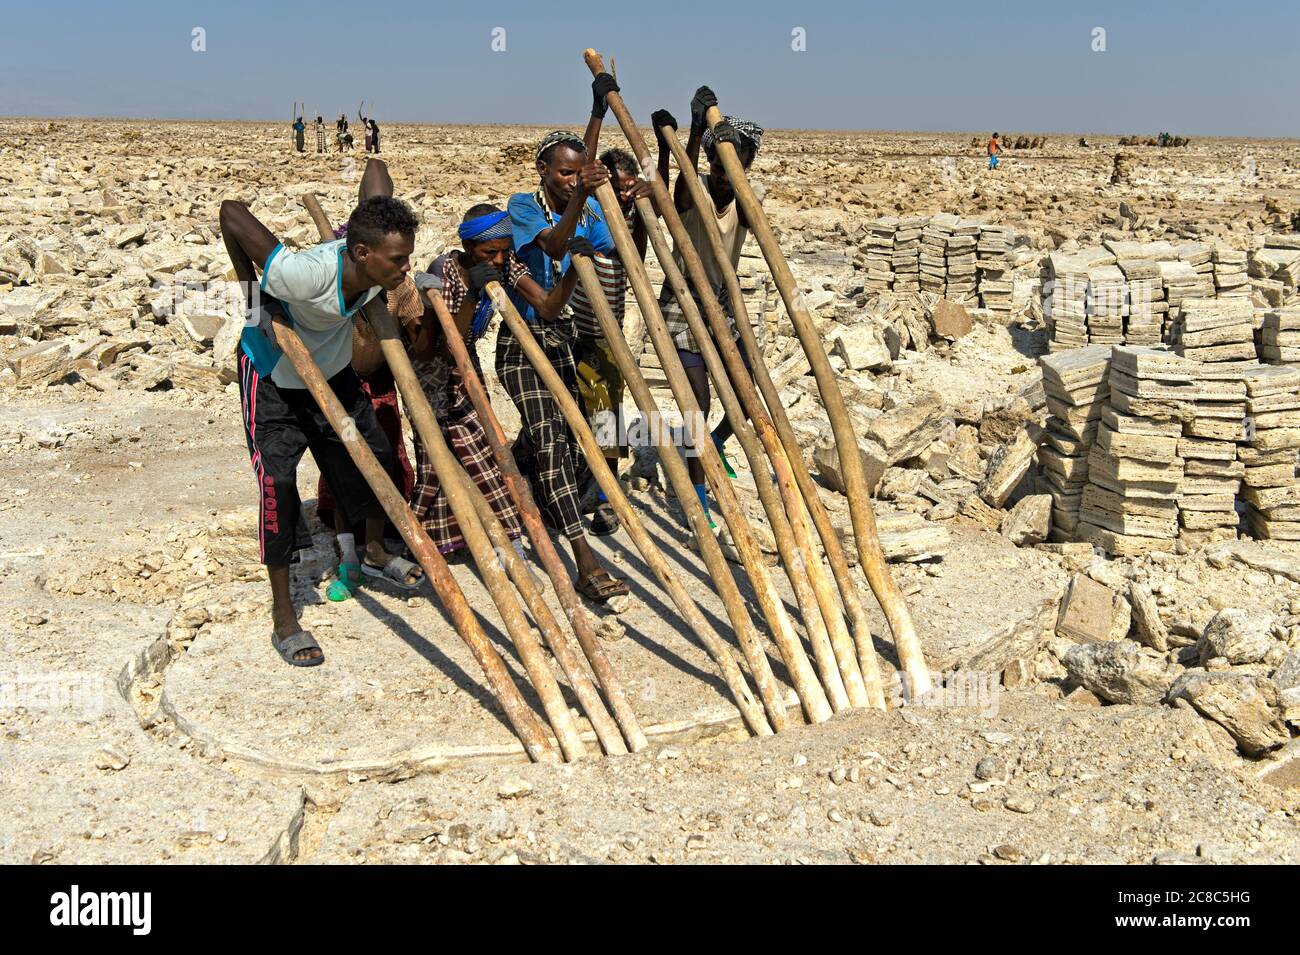 Salt workers breaking with wooden crowbars salt blocks from the salt crust of Lake Assale, near Hamadela, Danakil Depression, Afar region, Ethiopia Stock Photo